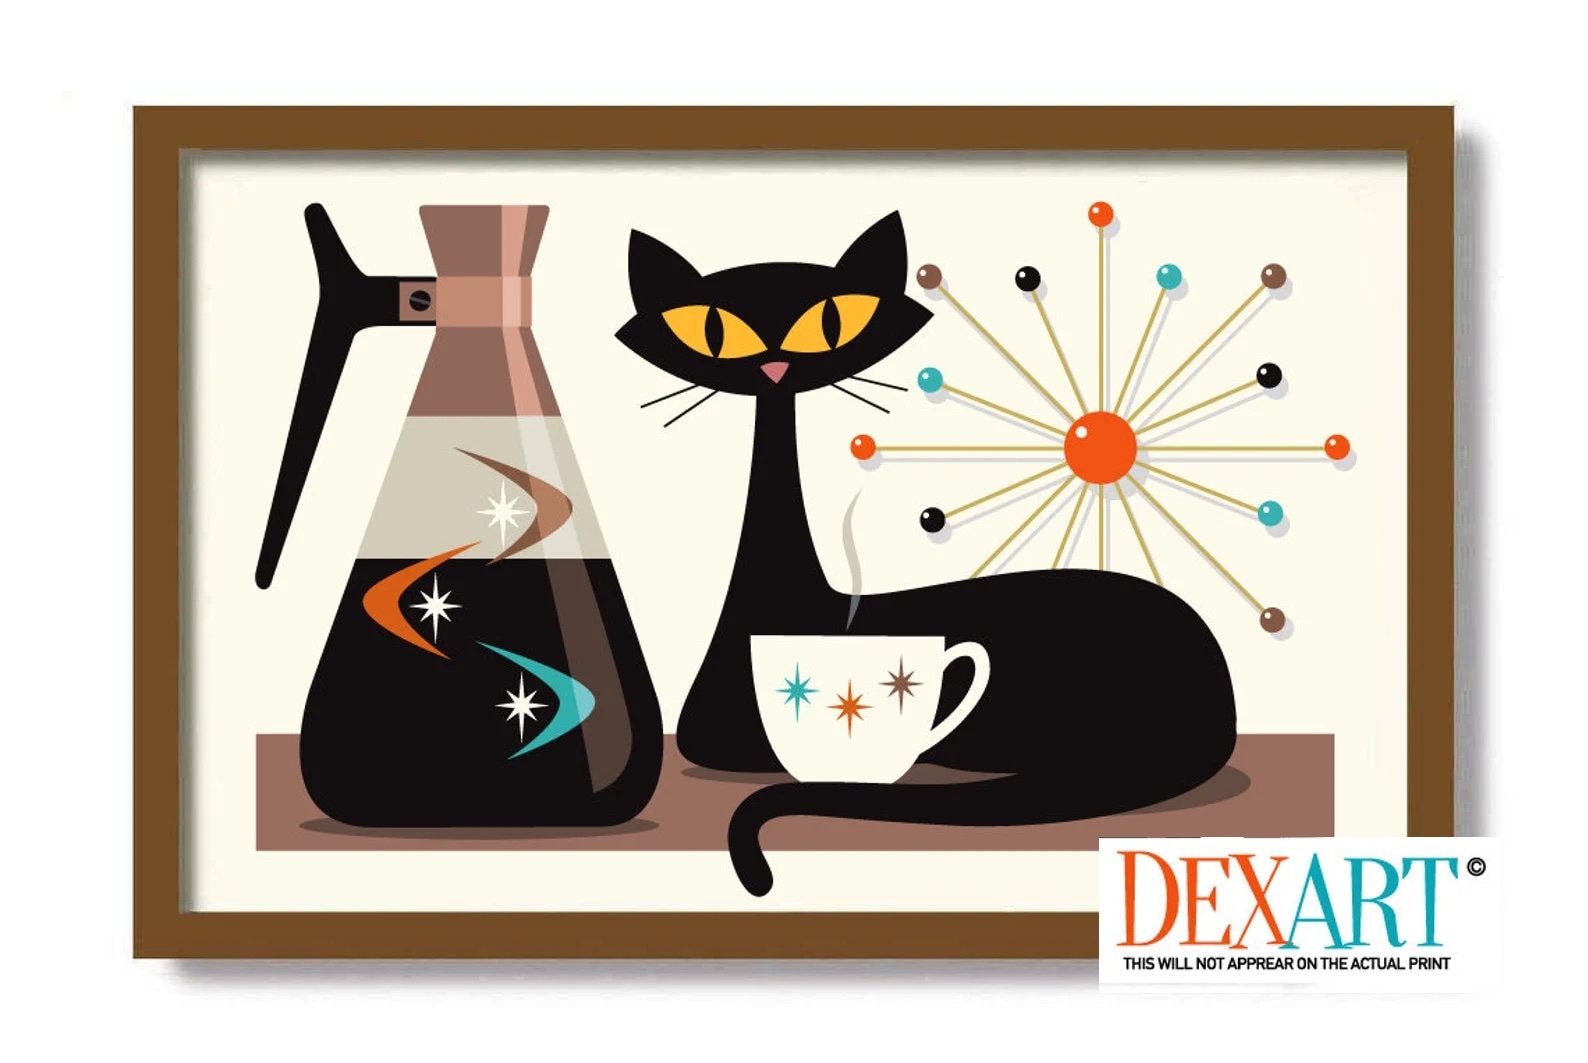 Black grumpy coffee drinking cat Mixed Media by Norman W - Fine Art America